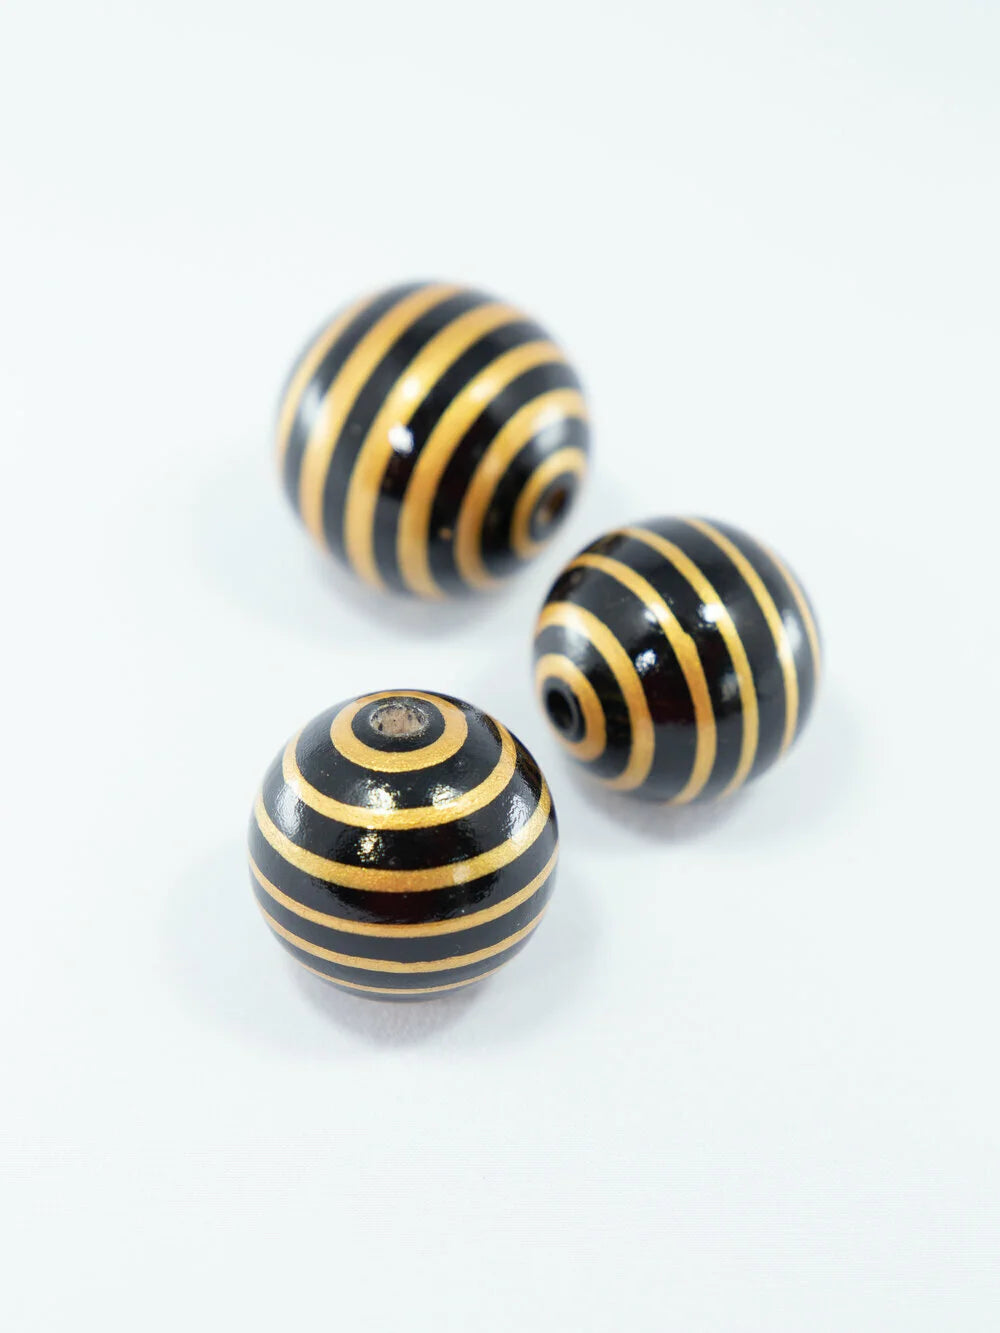 Perlina di legno a strisce dorate e nere